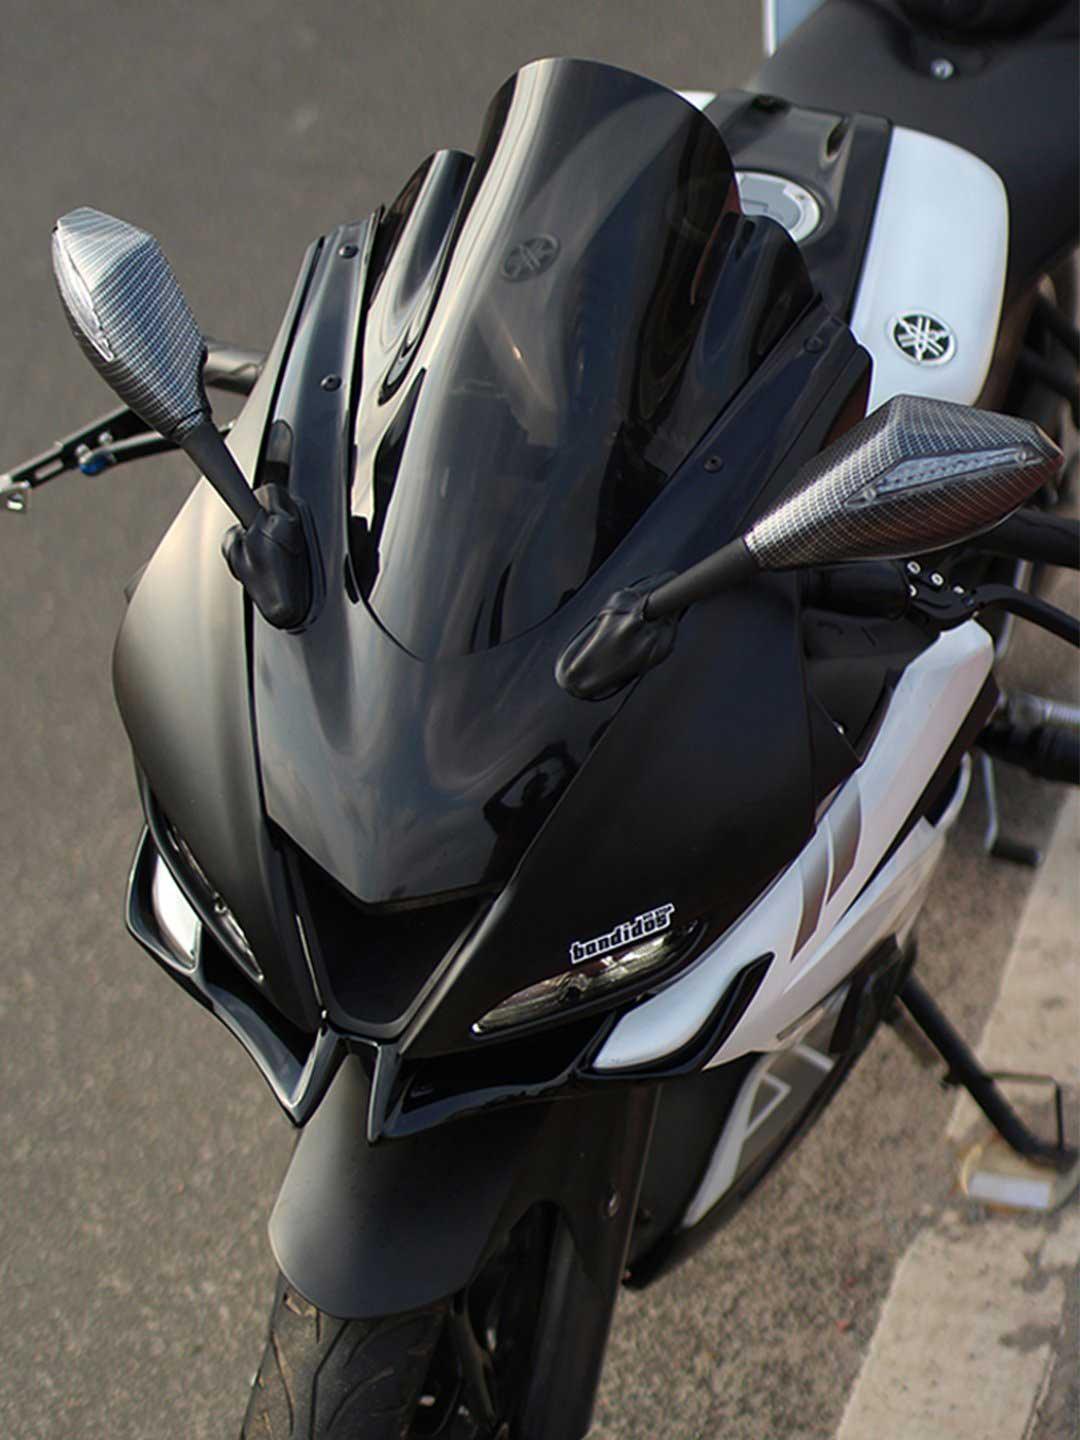 Yamaha R15 V3 Winglet 2.0 - Moto Modz